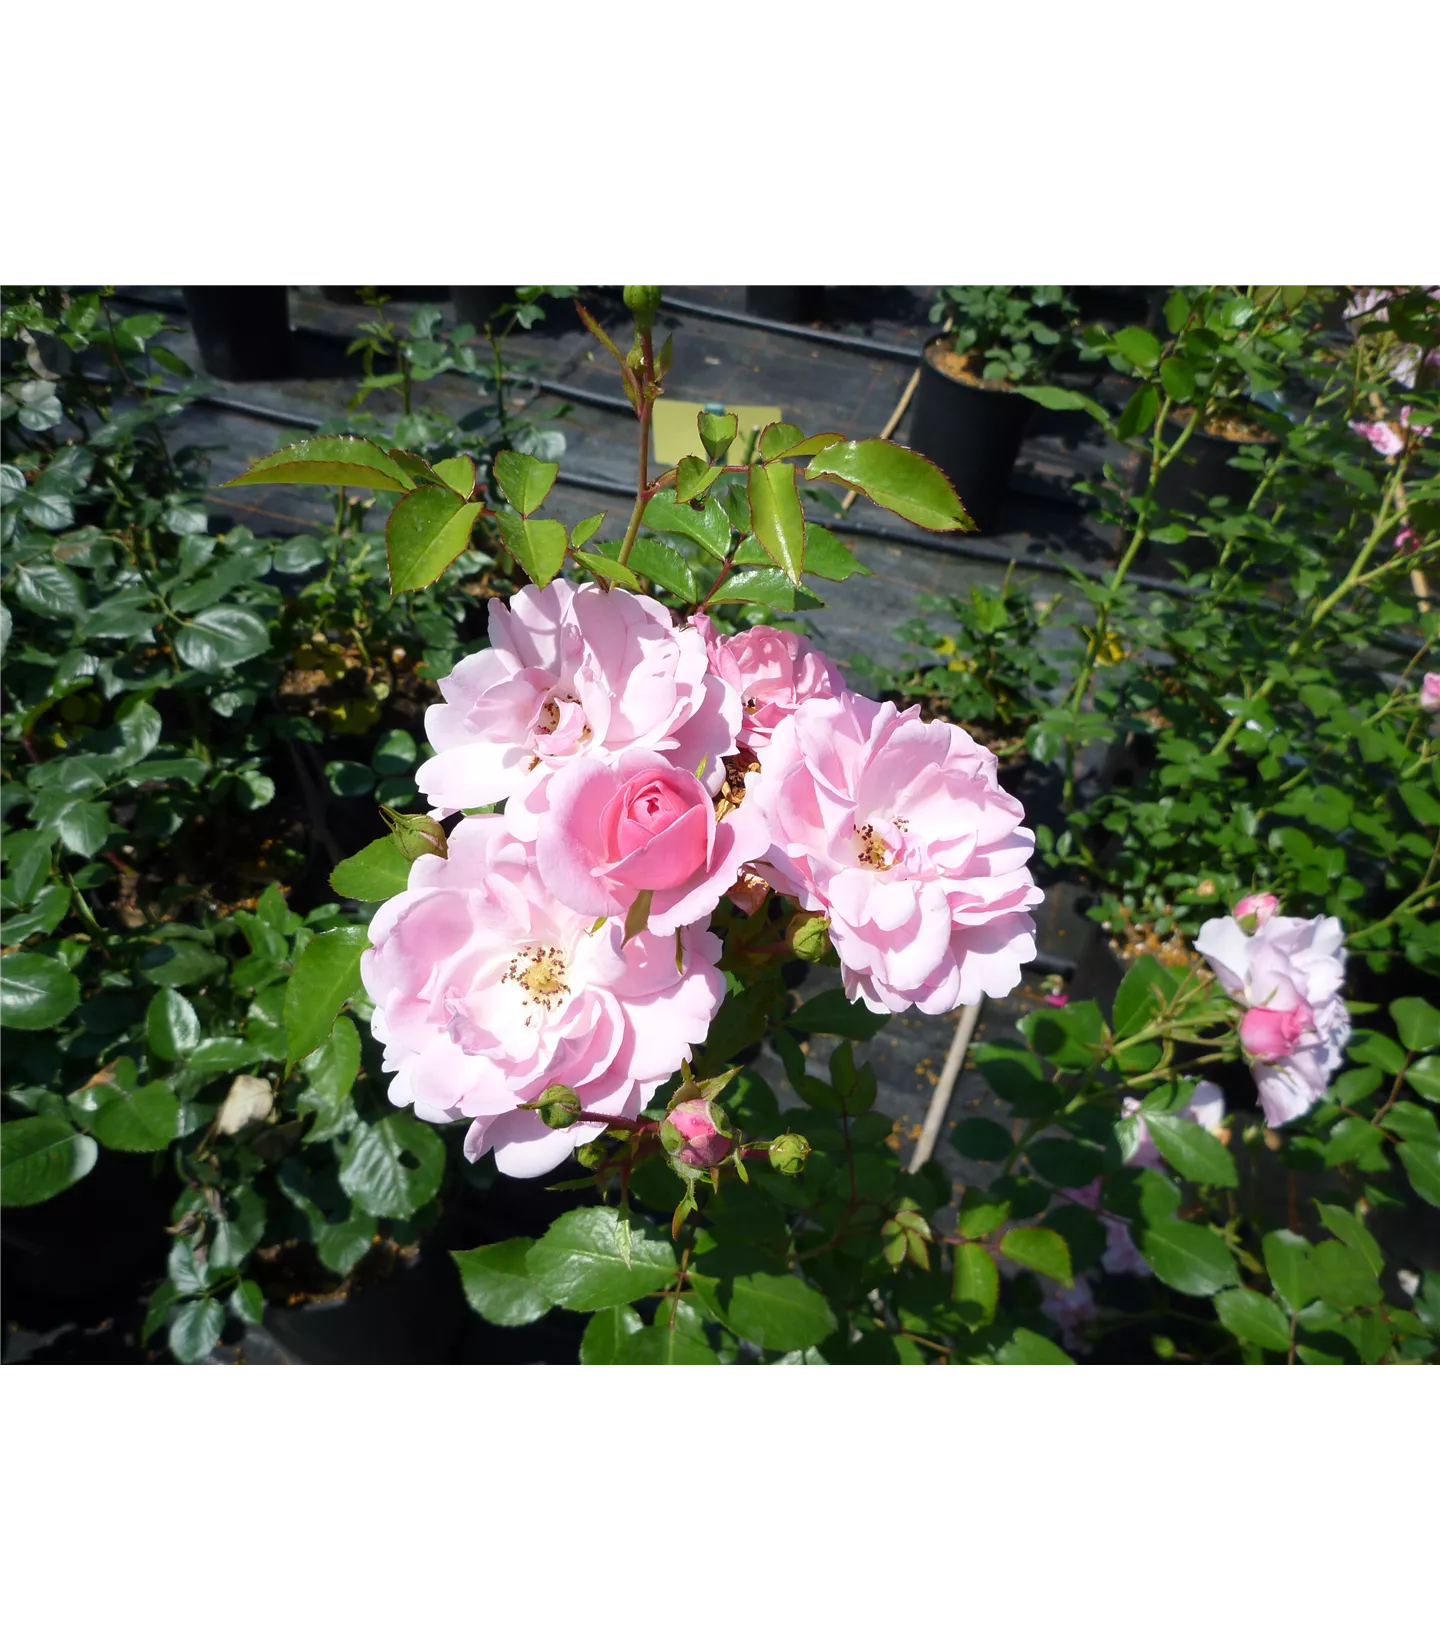 Rosa (Floribundarose) 'Bonica 82'